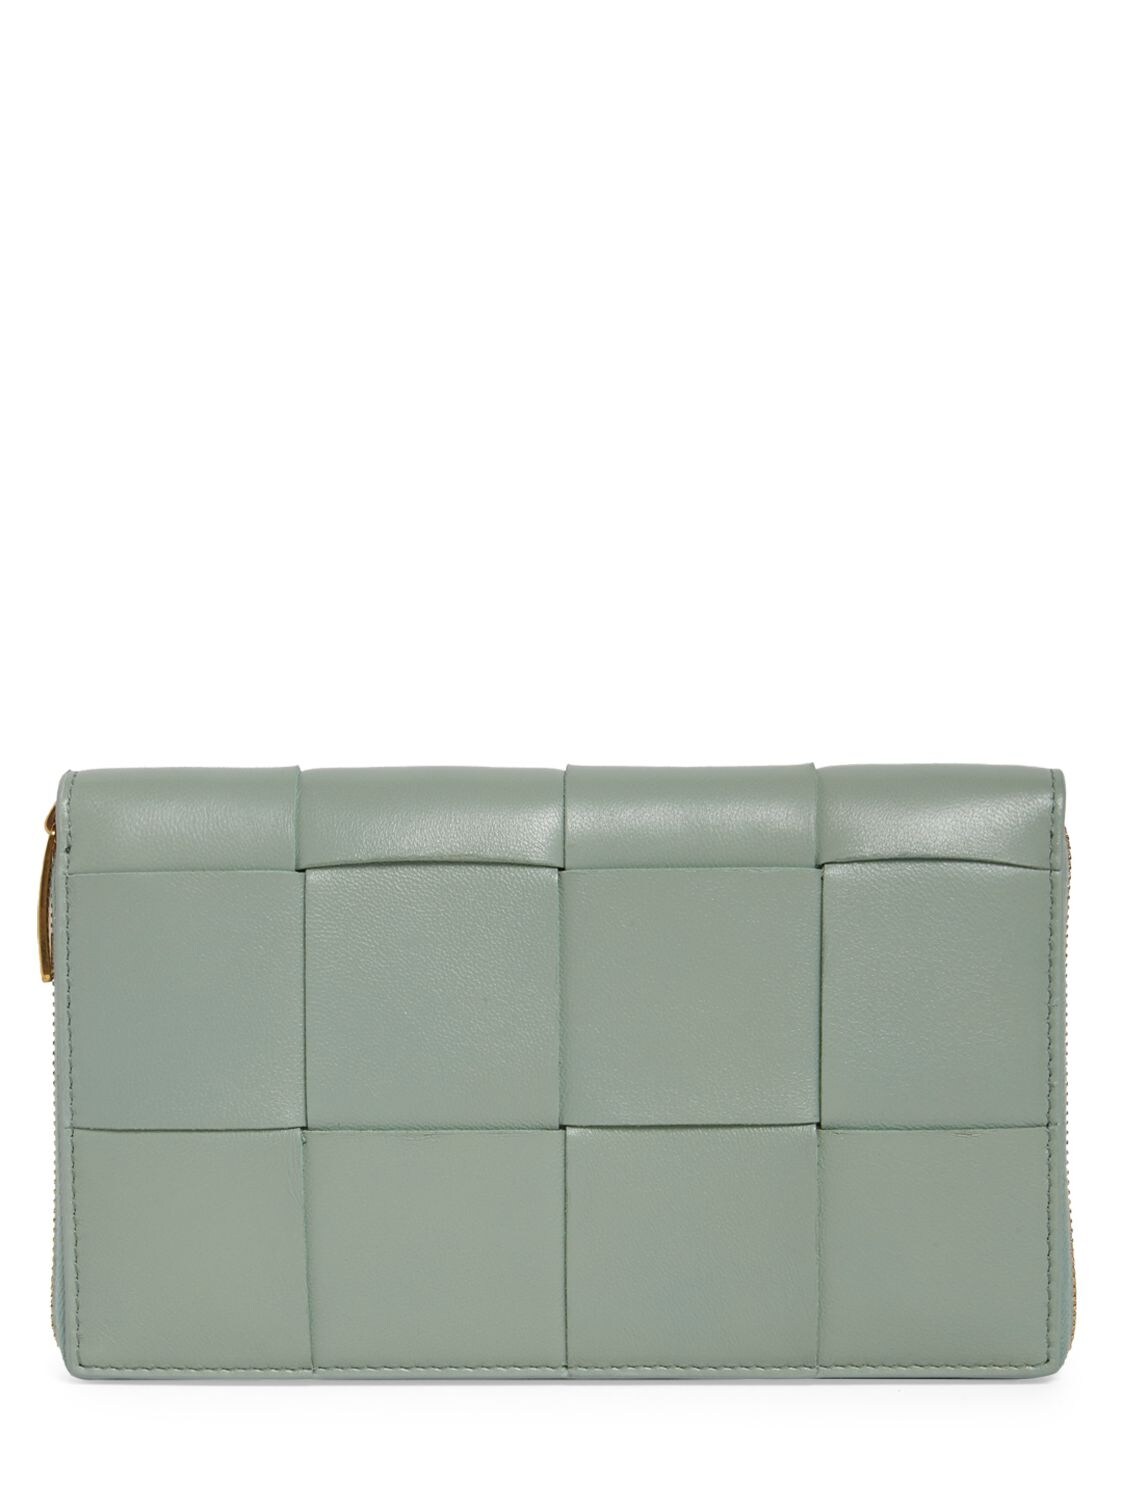 Bottega Veneta Intreccio Leather Zip Wallet In New Sauge | ModeSens